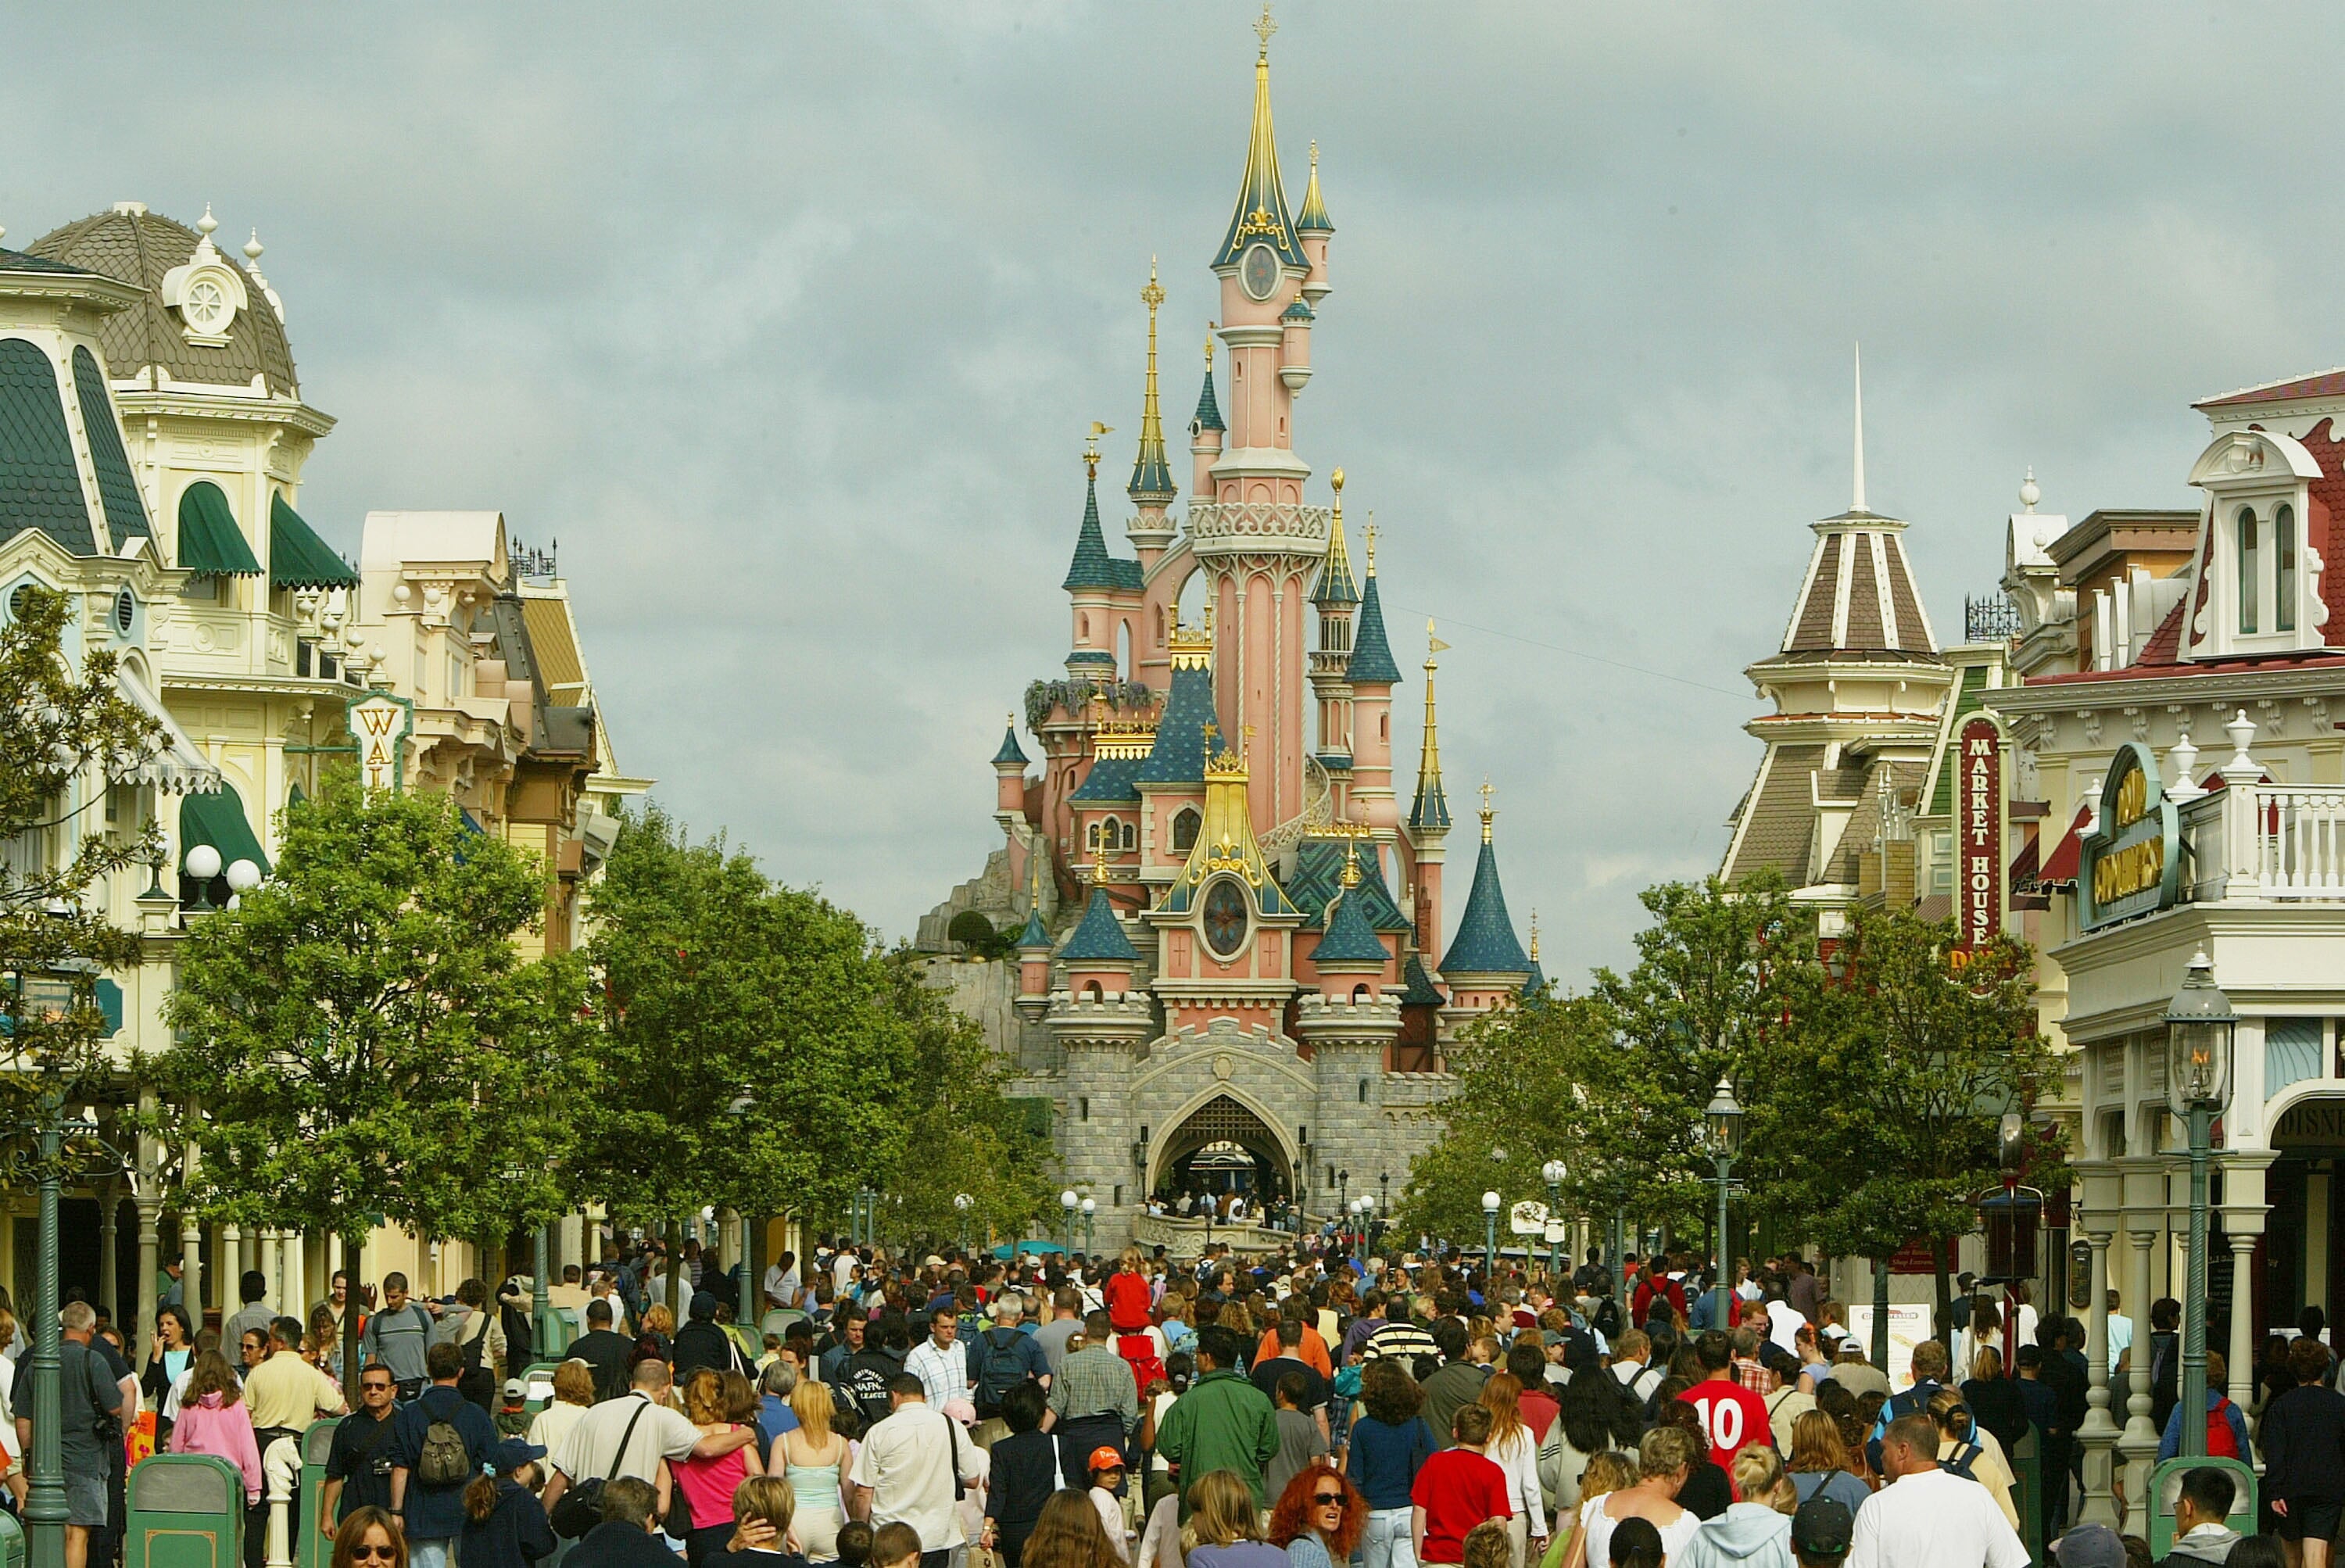 As well as DisneyLand Paris, Frozen attractions will also open at Tokyo DisneySea and Hong Kong Disneyland